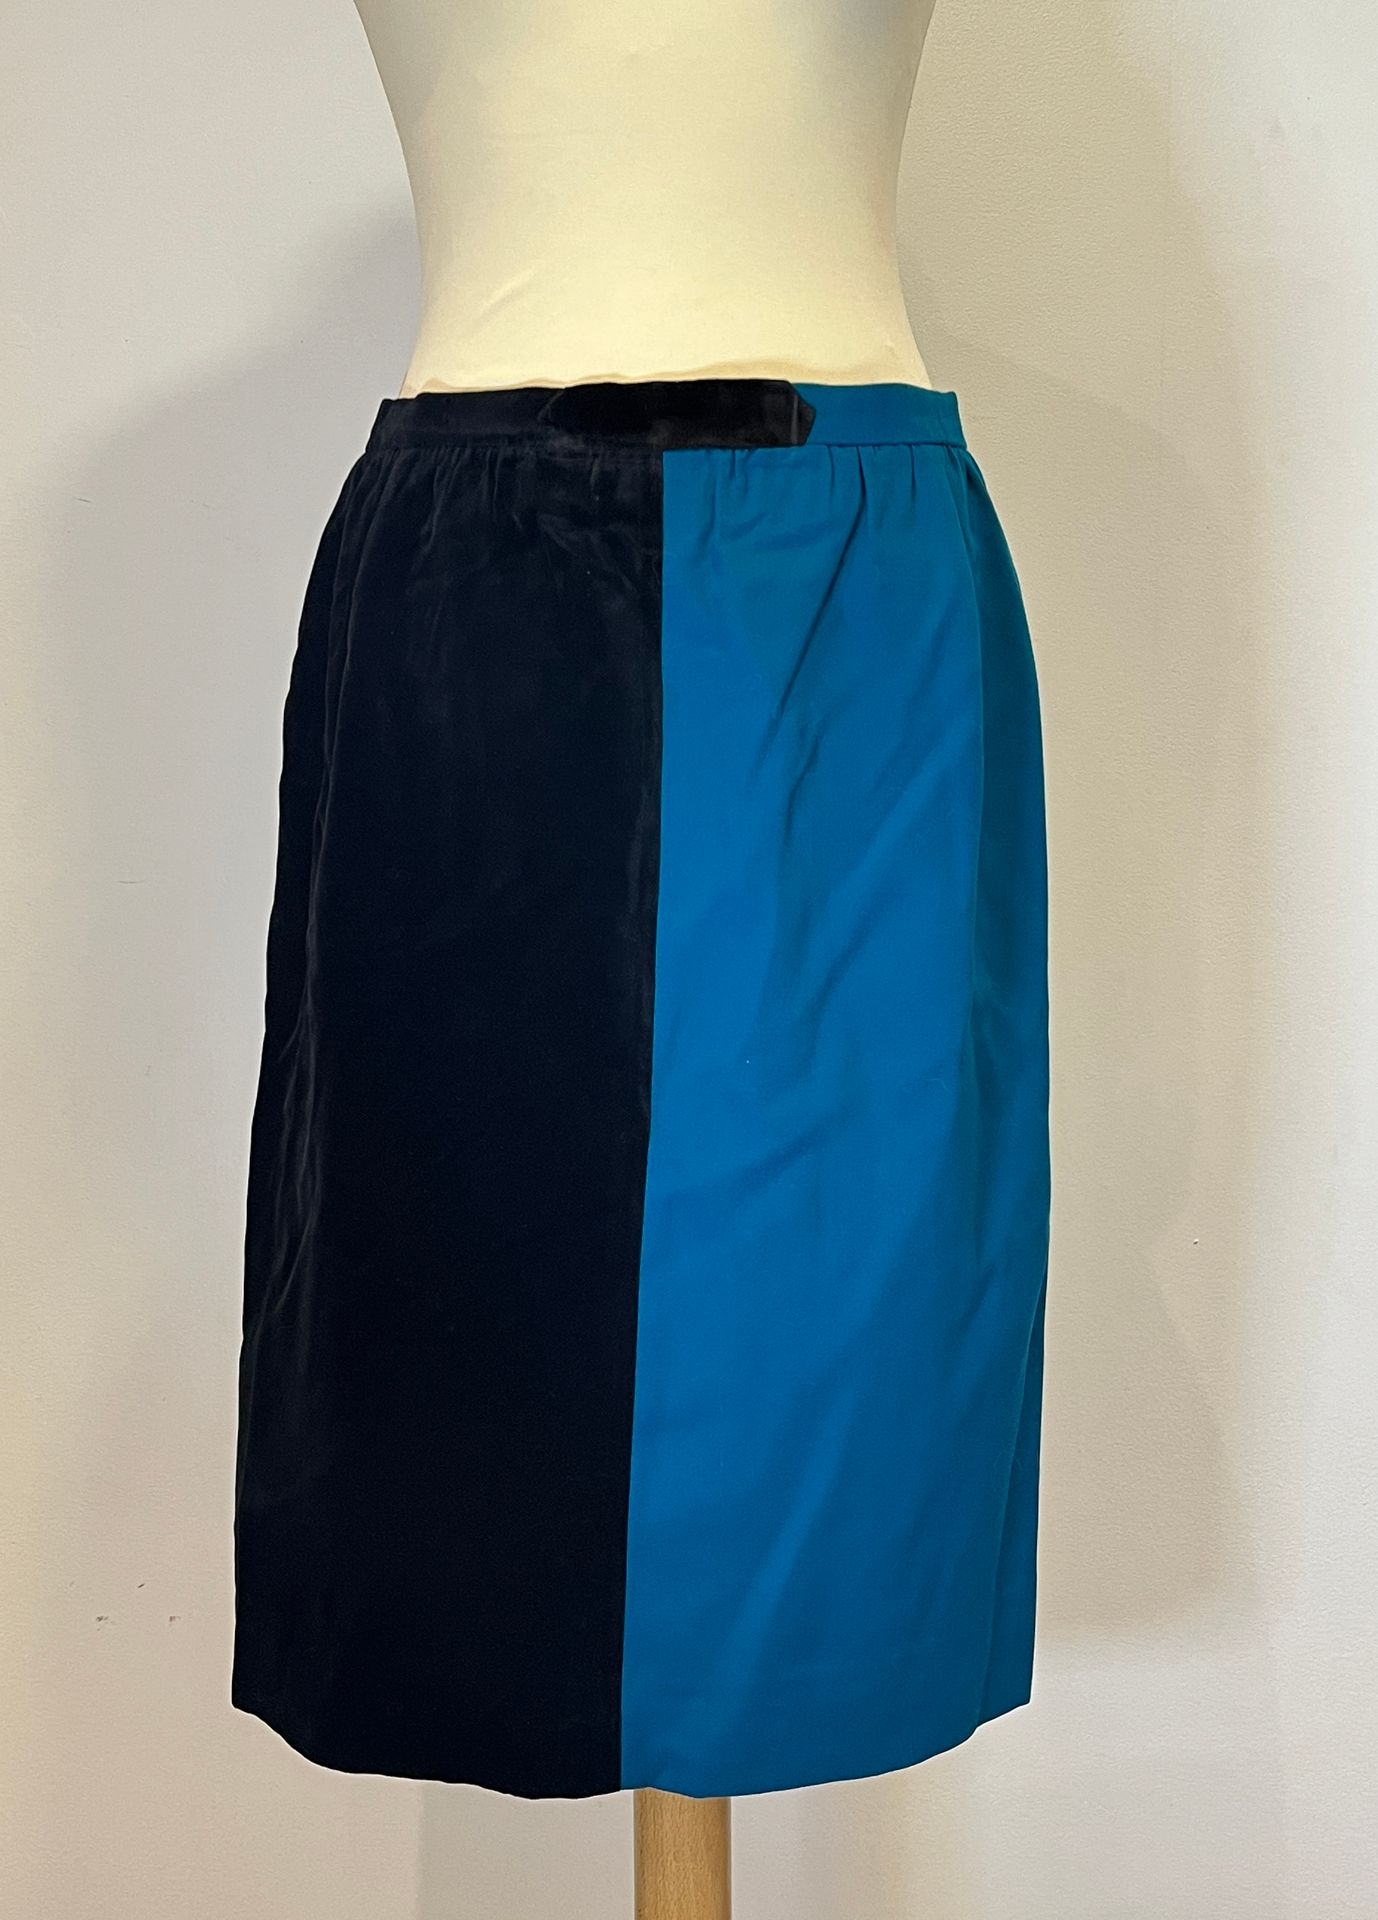 Null VALENTINO BOUTIQUE - 双色双料直筒裙：一边是黑色天鹅绒，另一边是汽油粉粒。尺寸42。附有同型号的黑色直筒裙。